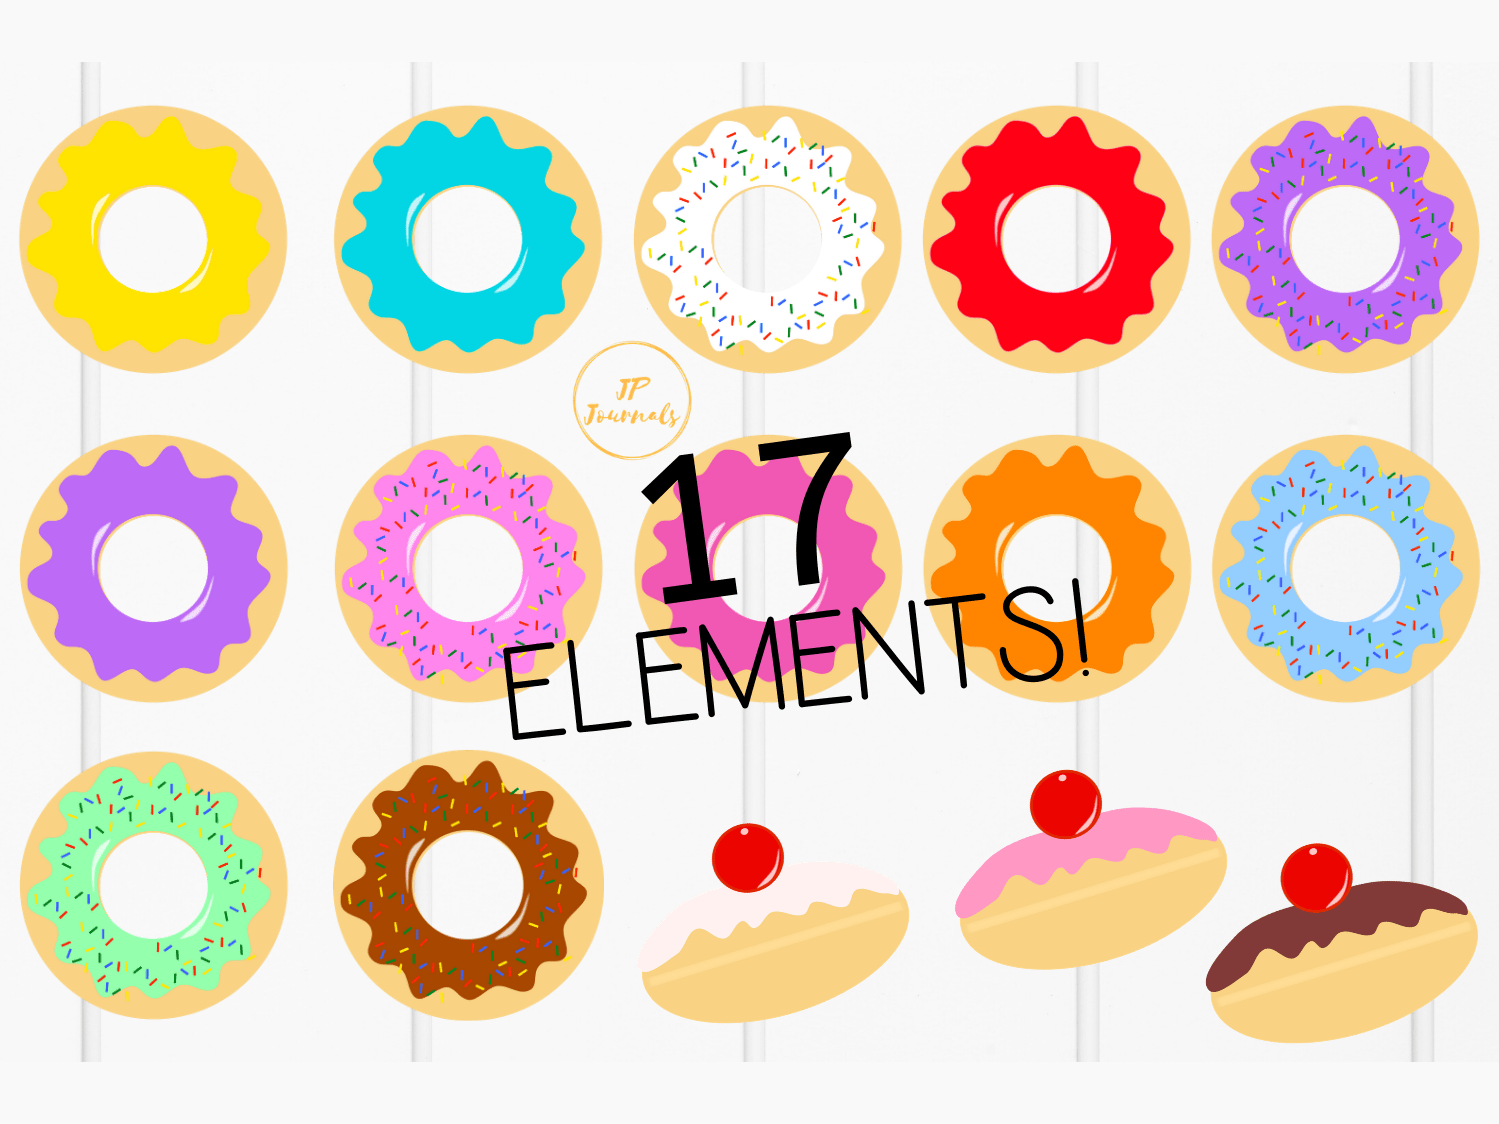 Yummy Donuts Clip Art